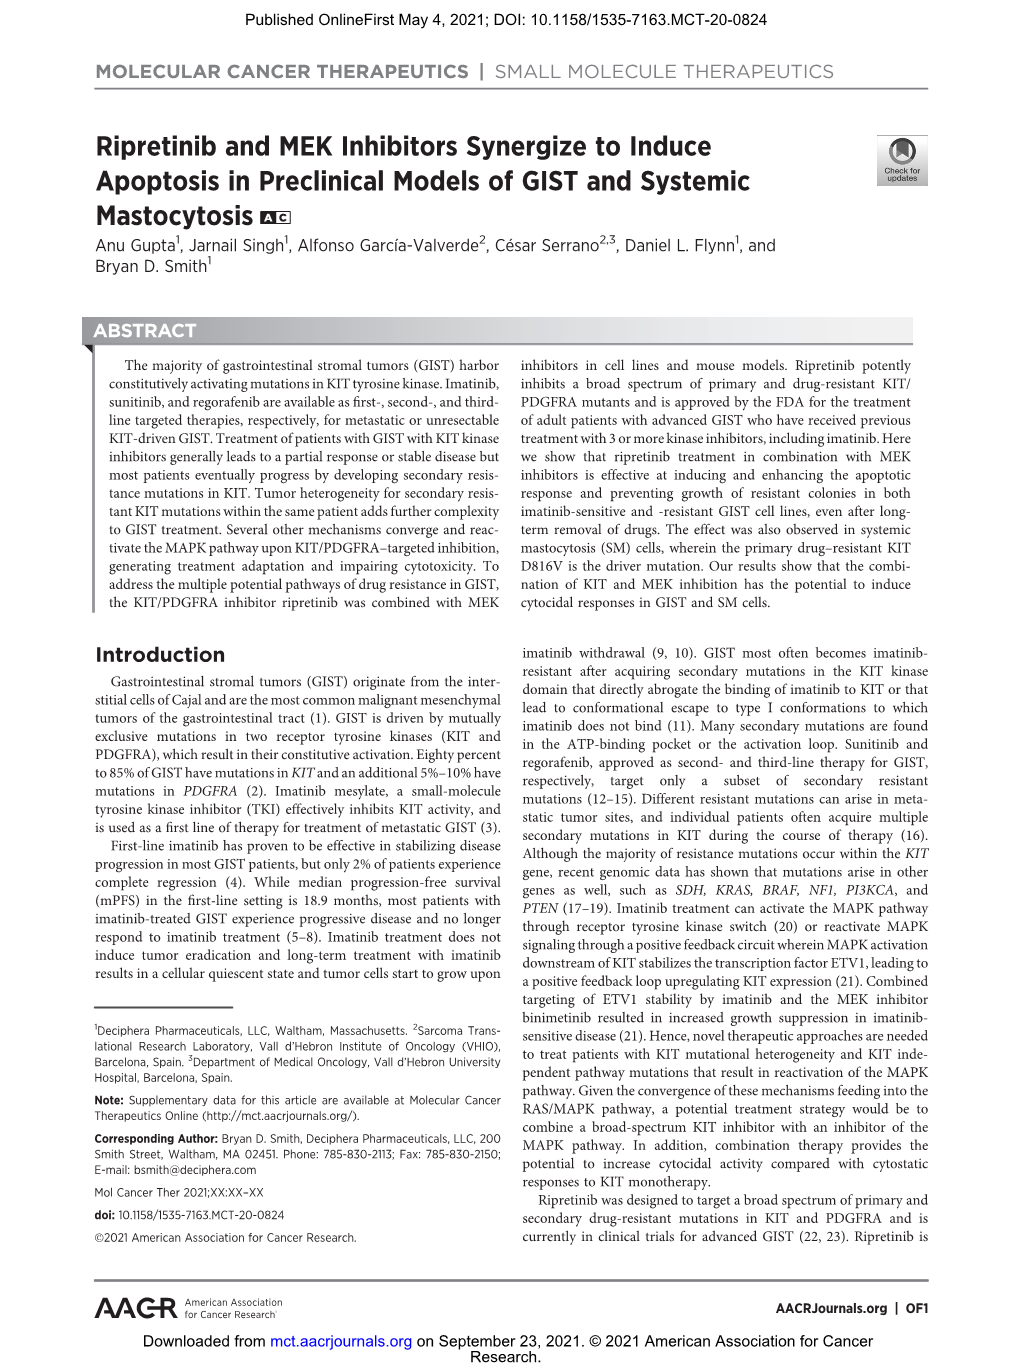 Ripretinib and MEK Inhibitors Synergize to Induce Apoptosis In